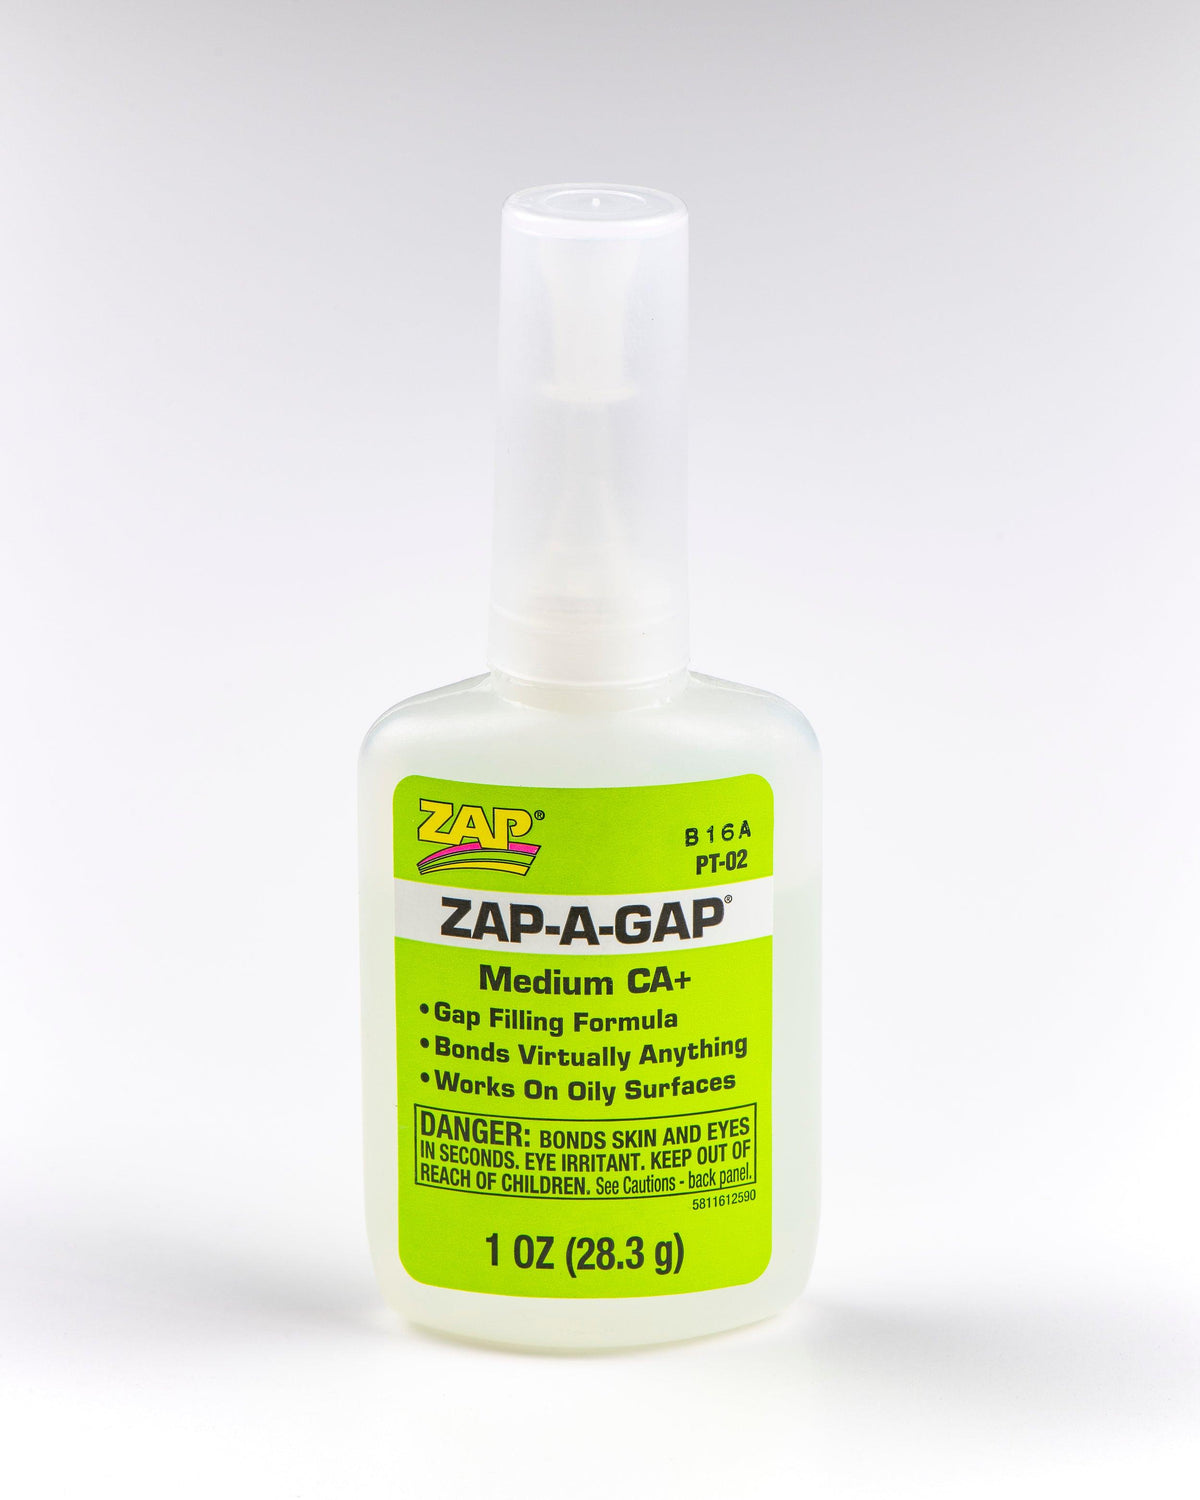 Zap Glue - Finishers Depot